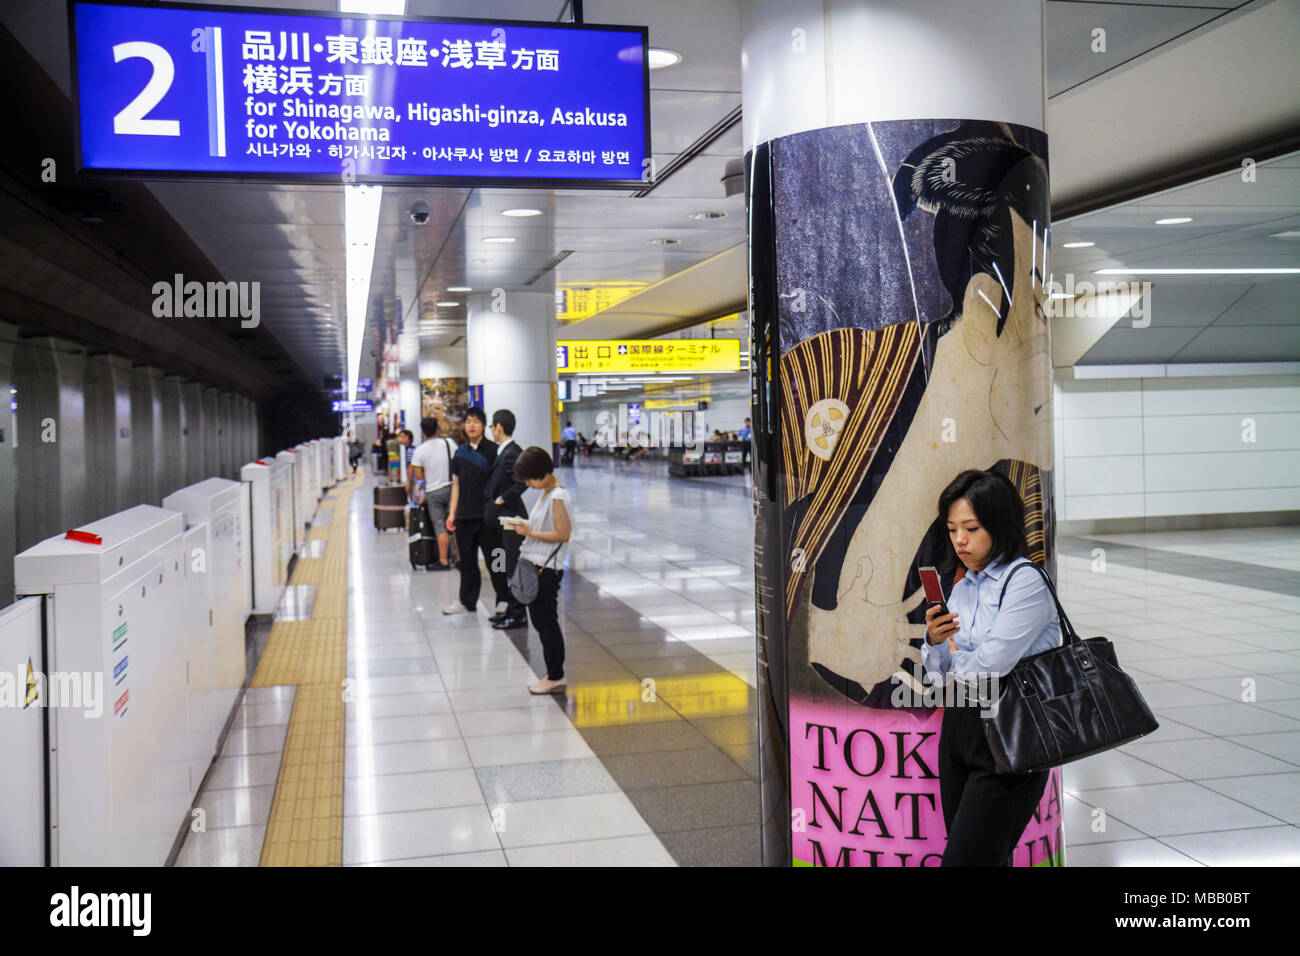 Tokyo Japan,Haneda Airport,Inglese & Giapponese,kanji,hiragana,personaggi,simboli,Keikyu Line,treno,metropolitana,treno,treno,stazione,cartello,informazioni,Asian OR Foto Stock